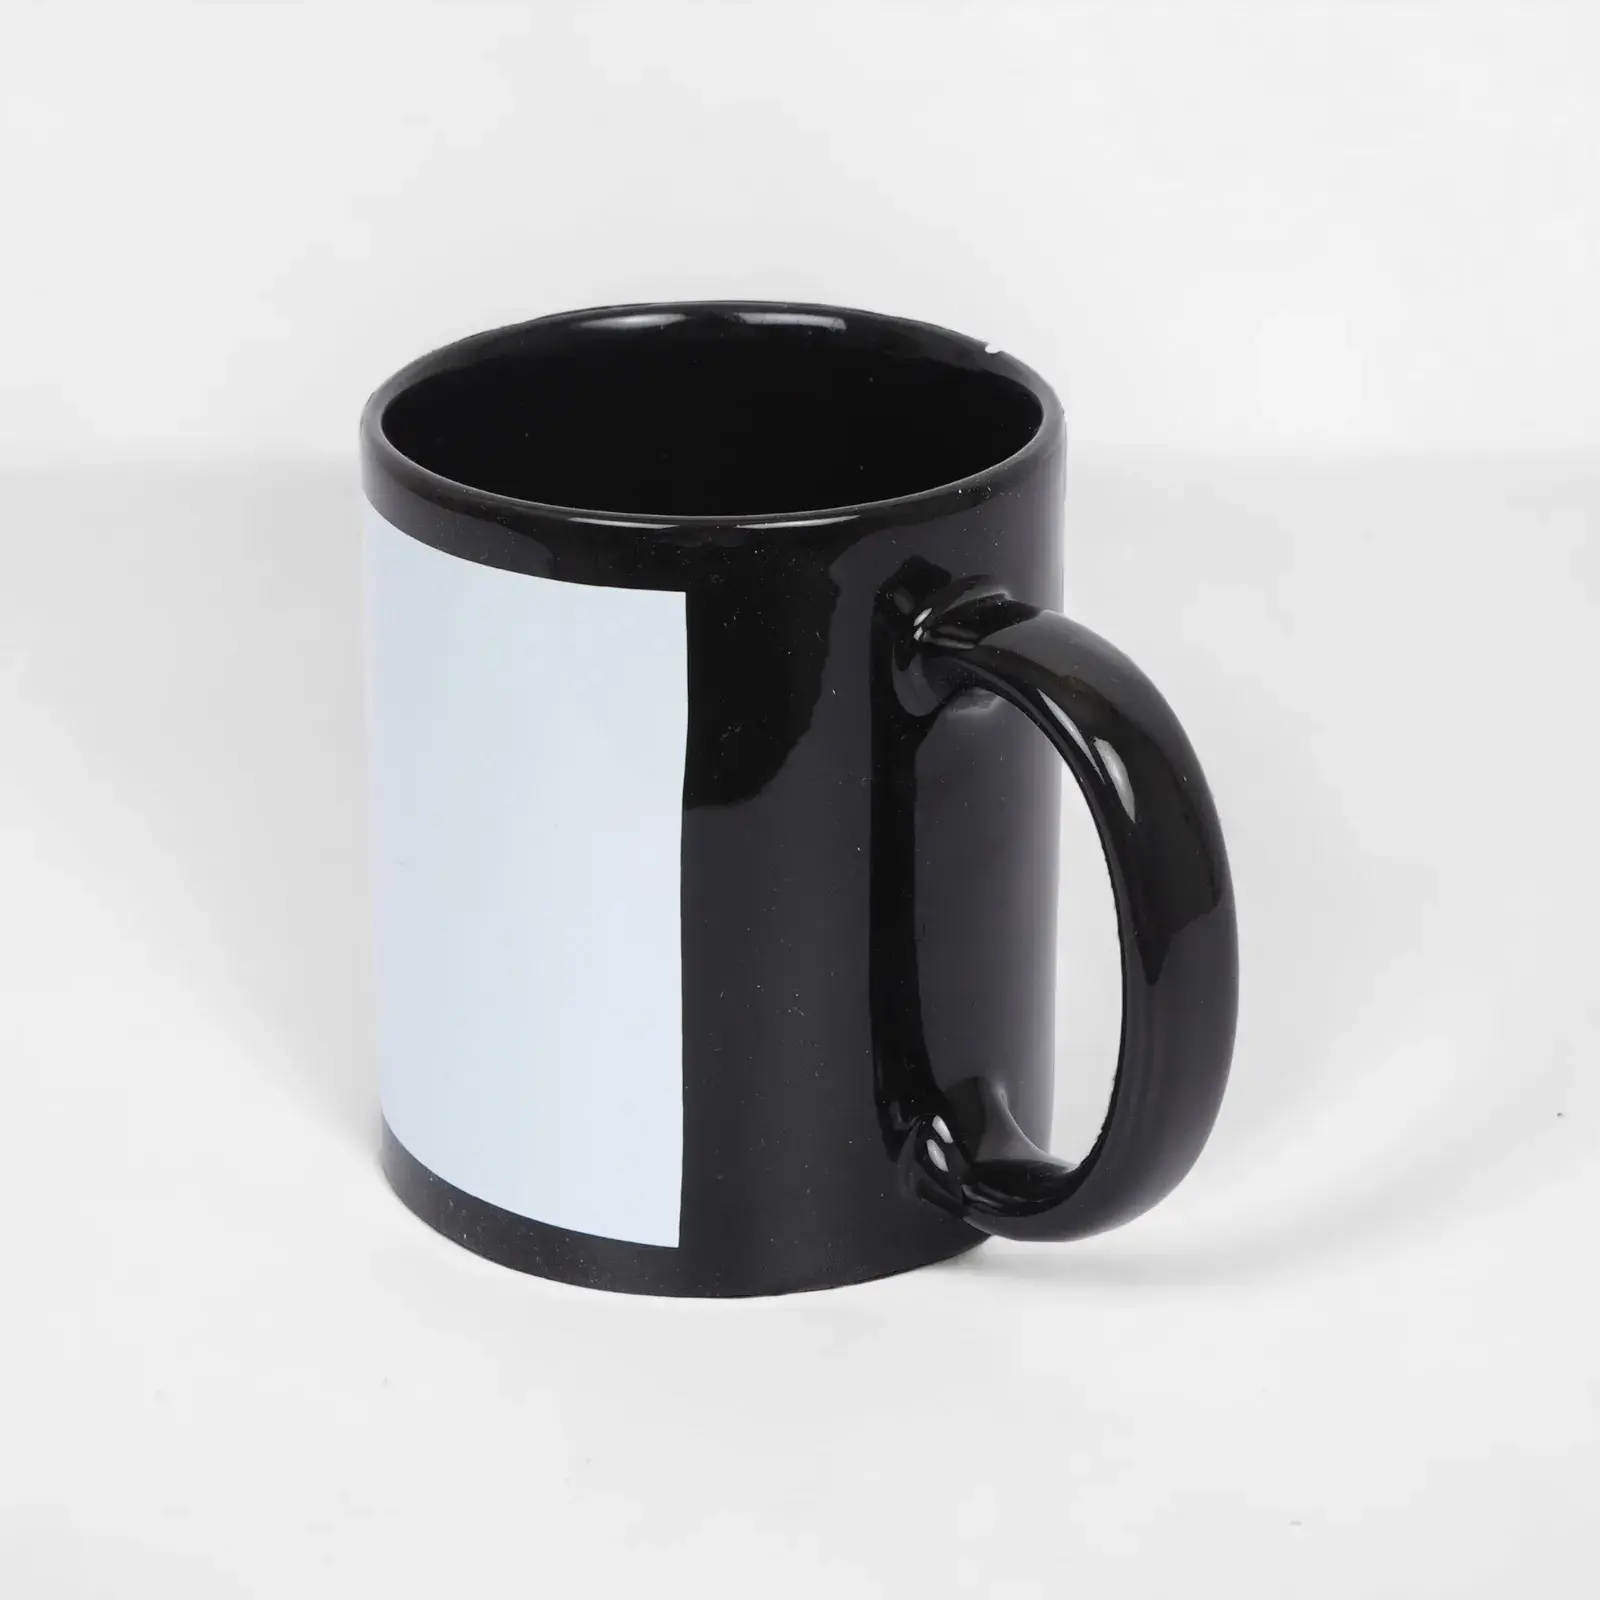 Black coffee mug qikink